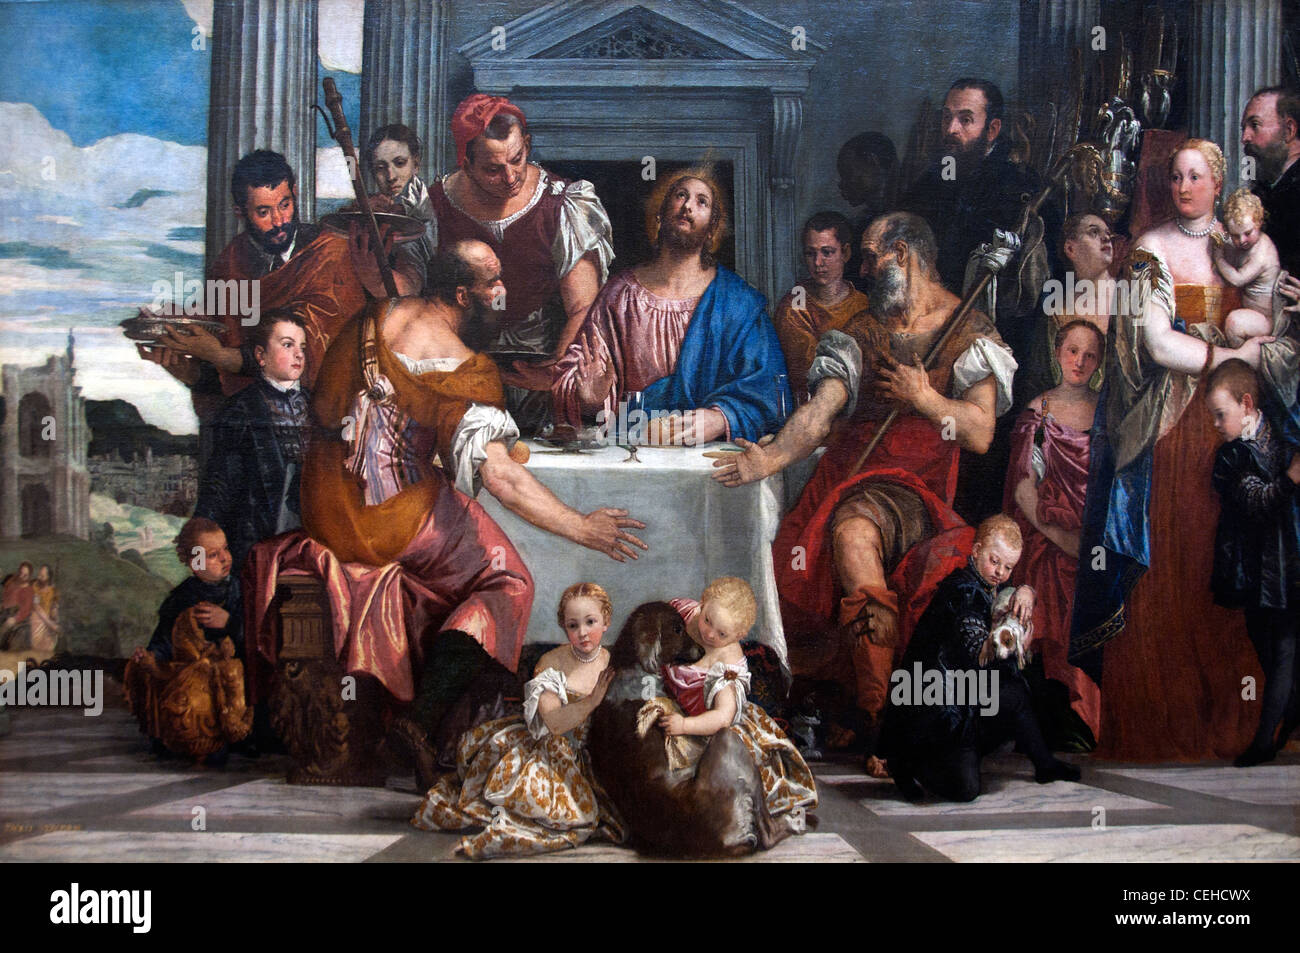 The pilgrims of Emmaus by VERONESE Paolo Caliari1559 Italian Italy Stock Photo